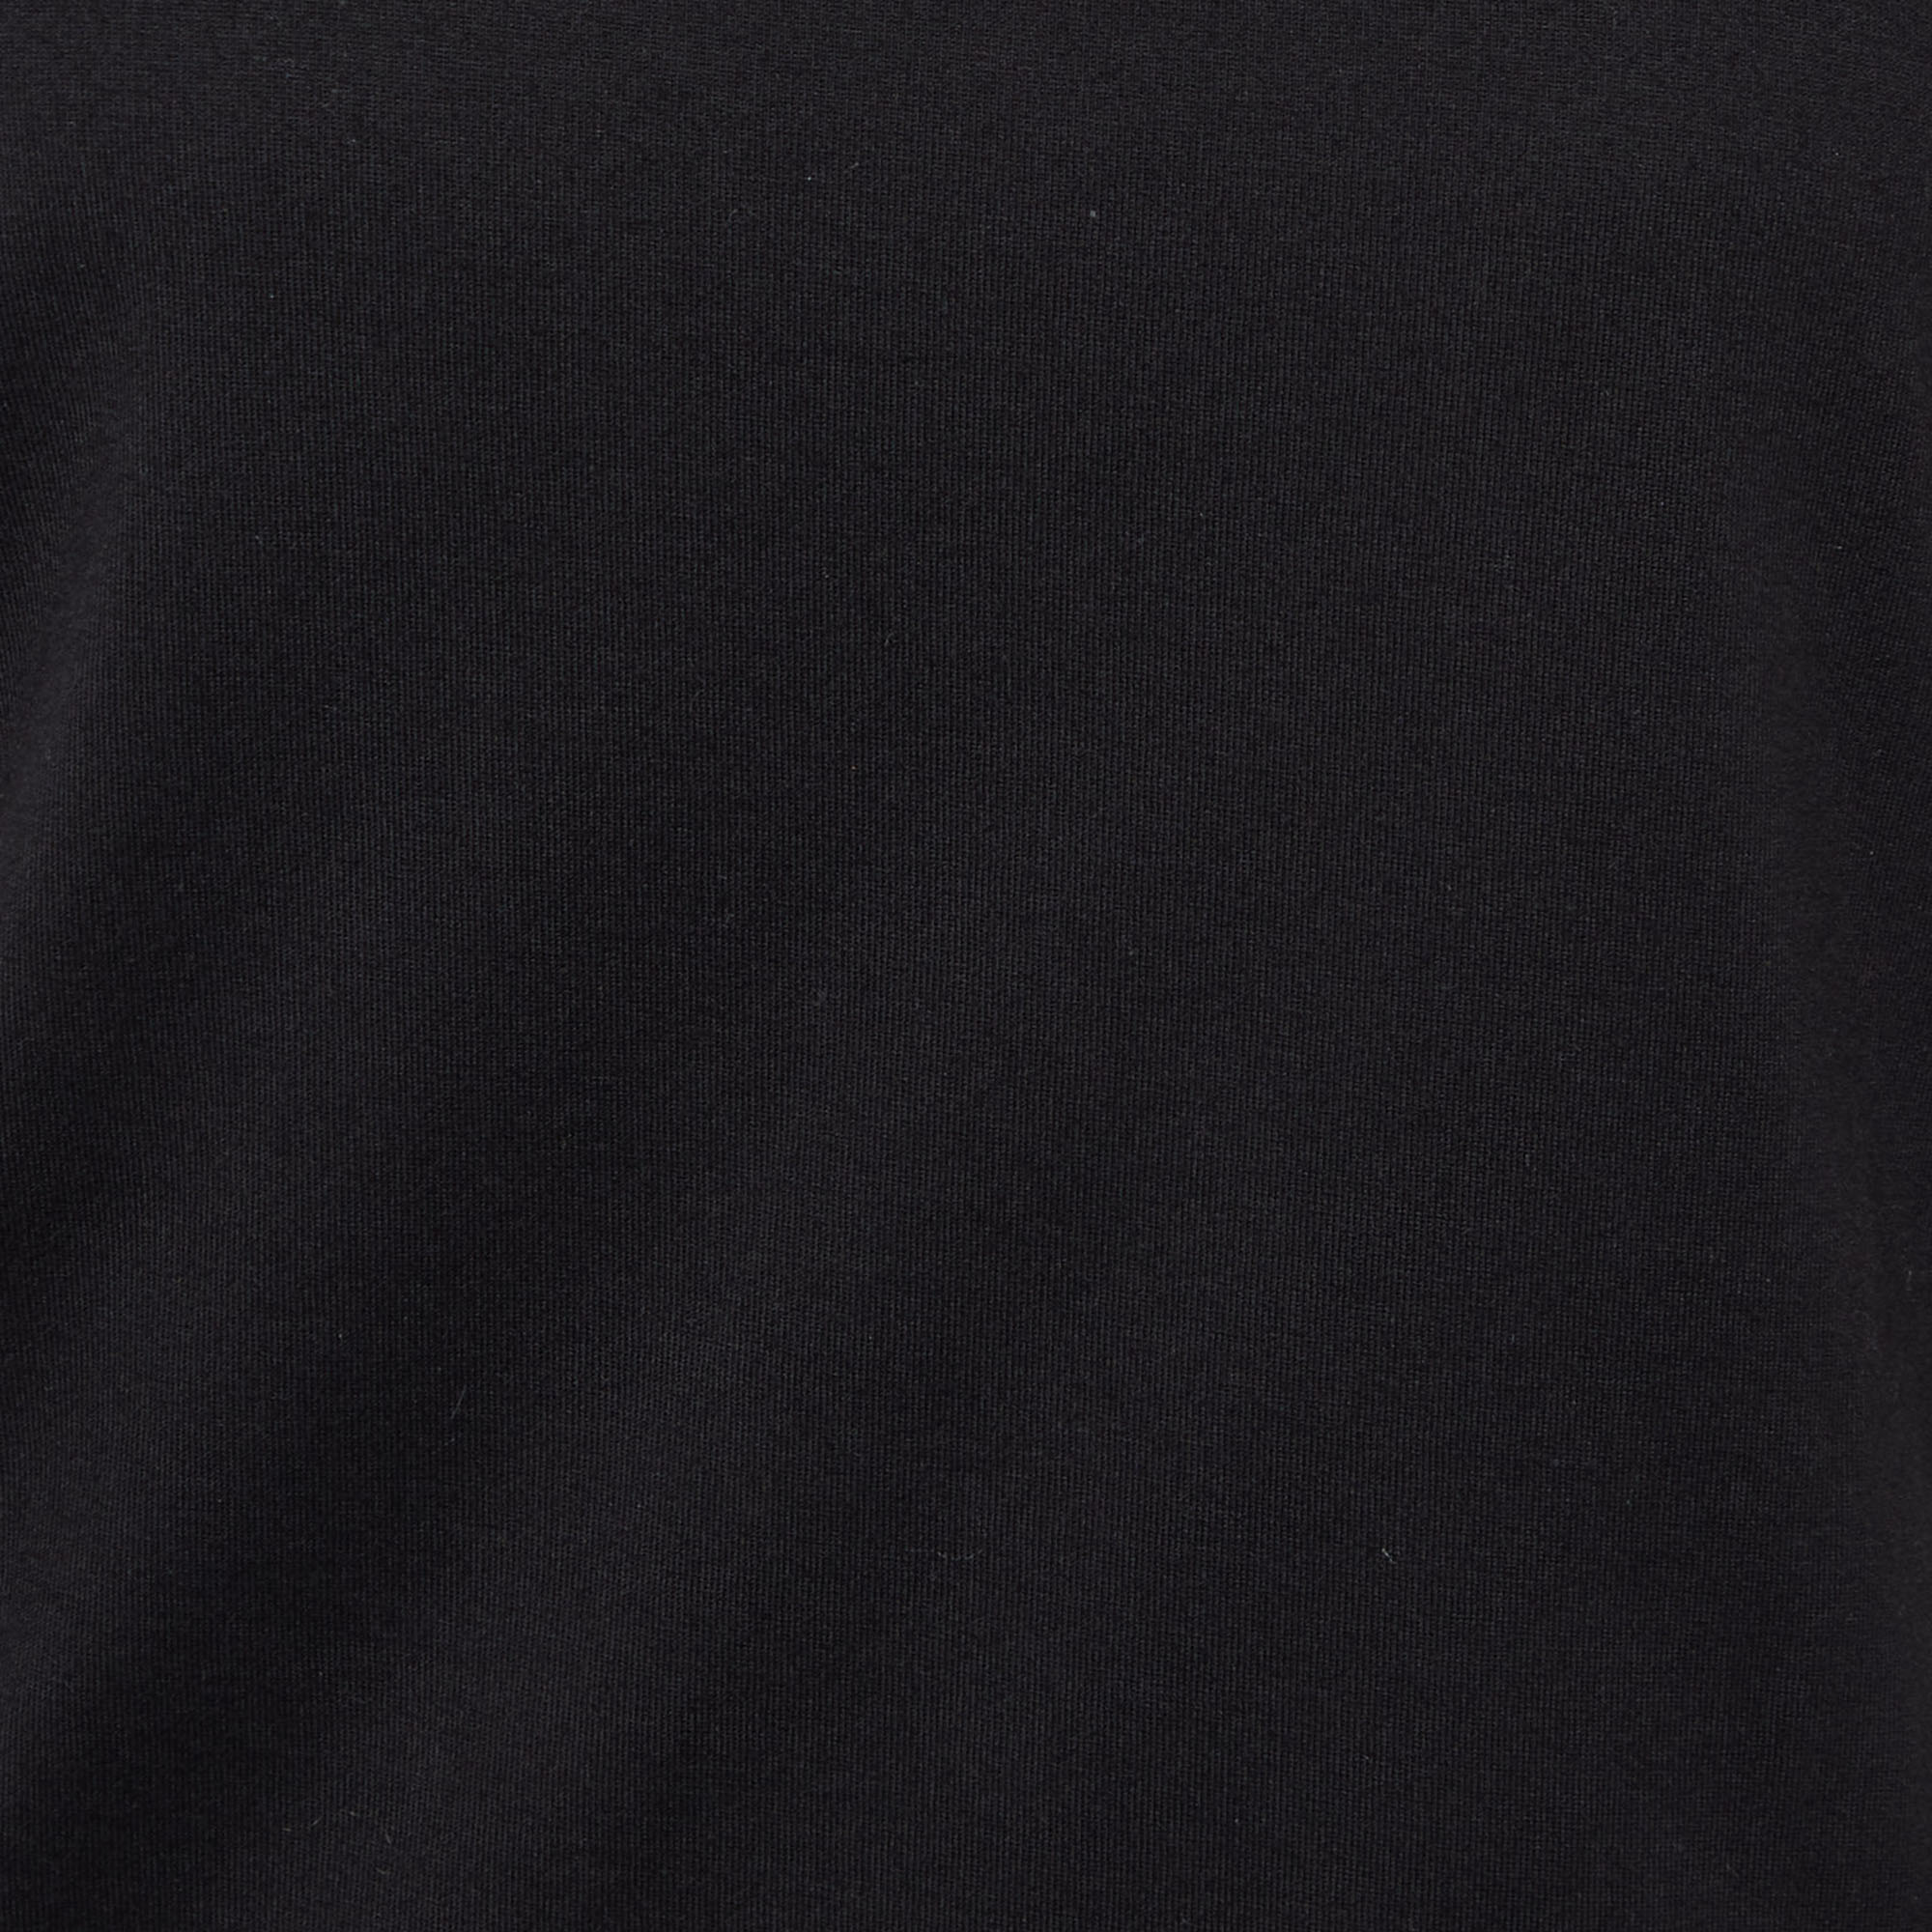 Balmain Black Cotton Knit & Tulle Trim Detail T-Shirt S